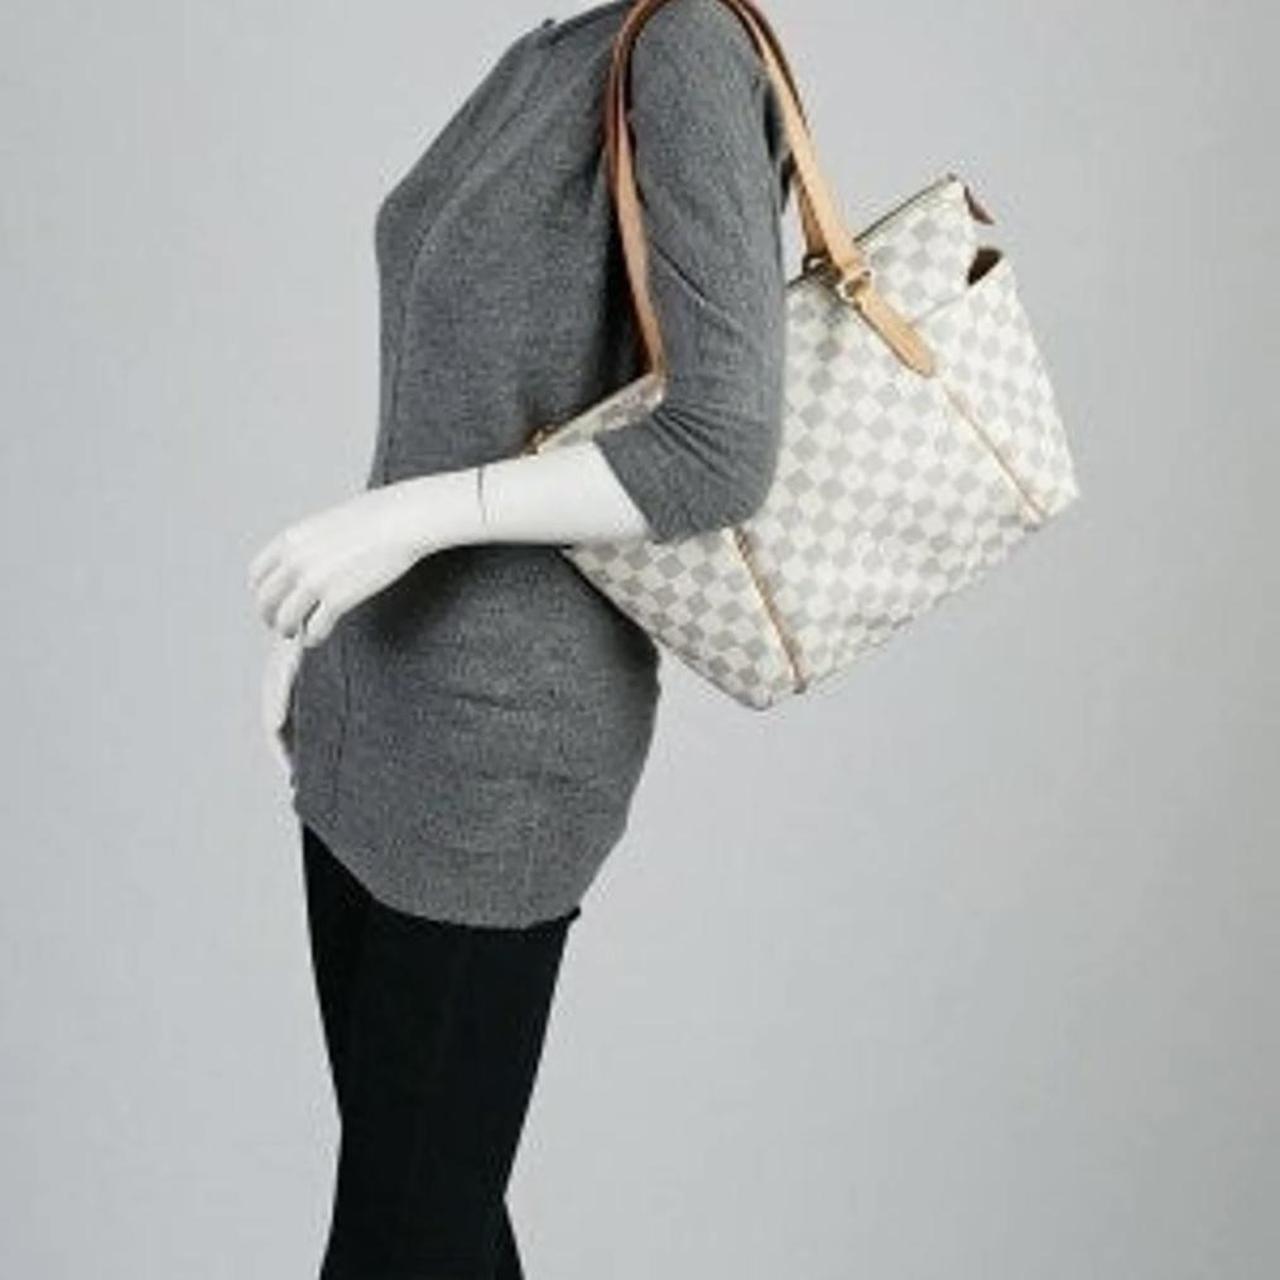 Louis Vuitton, Bags, Authentic Louis Vuitton Totally Pm